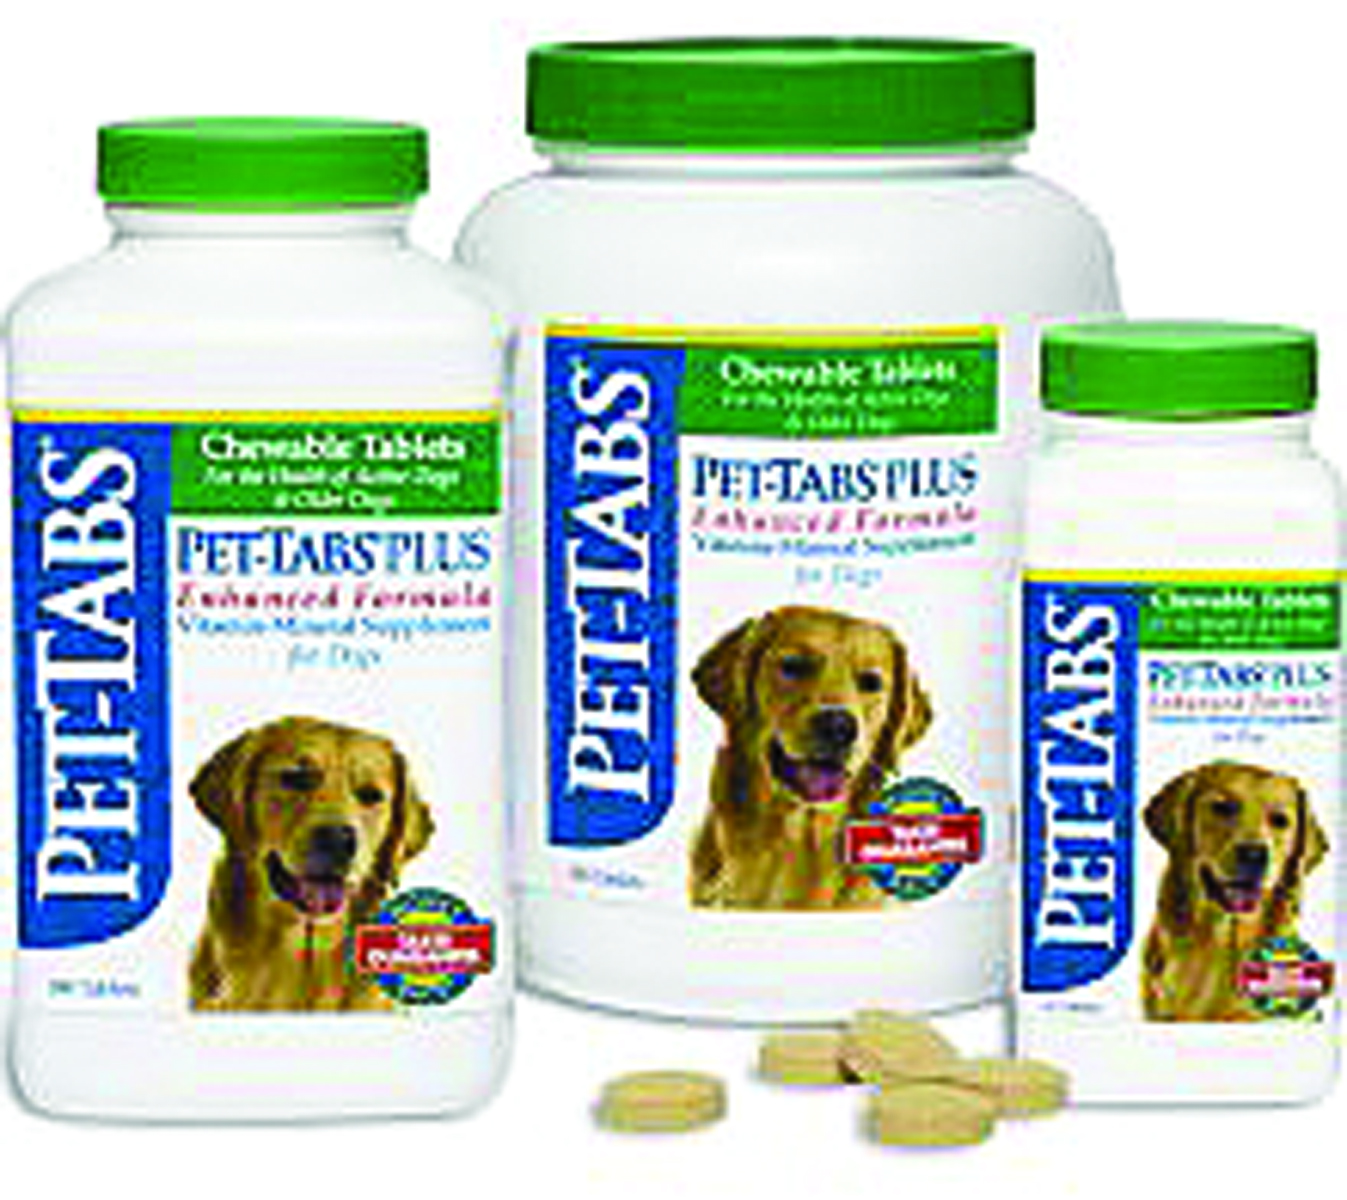 Pet-Tabs Plus Vitamins & Supplements - 180 Tablets